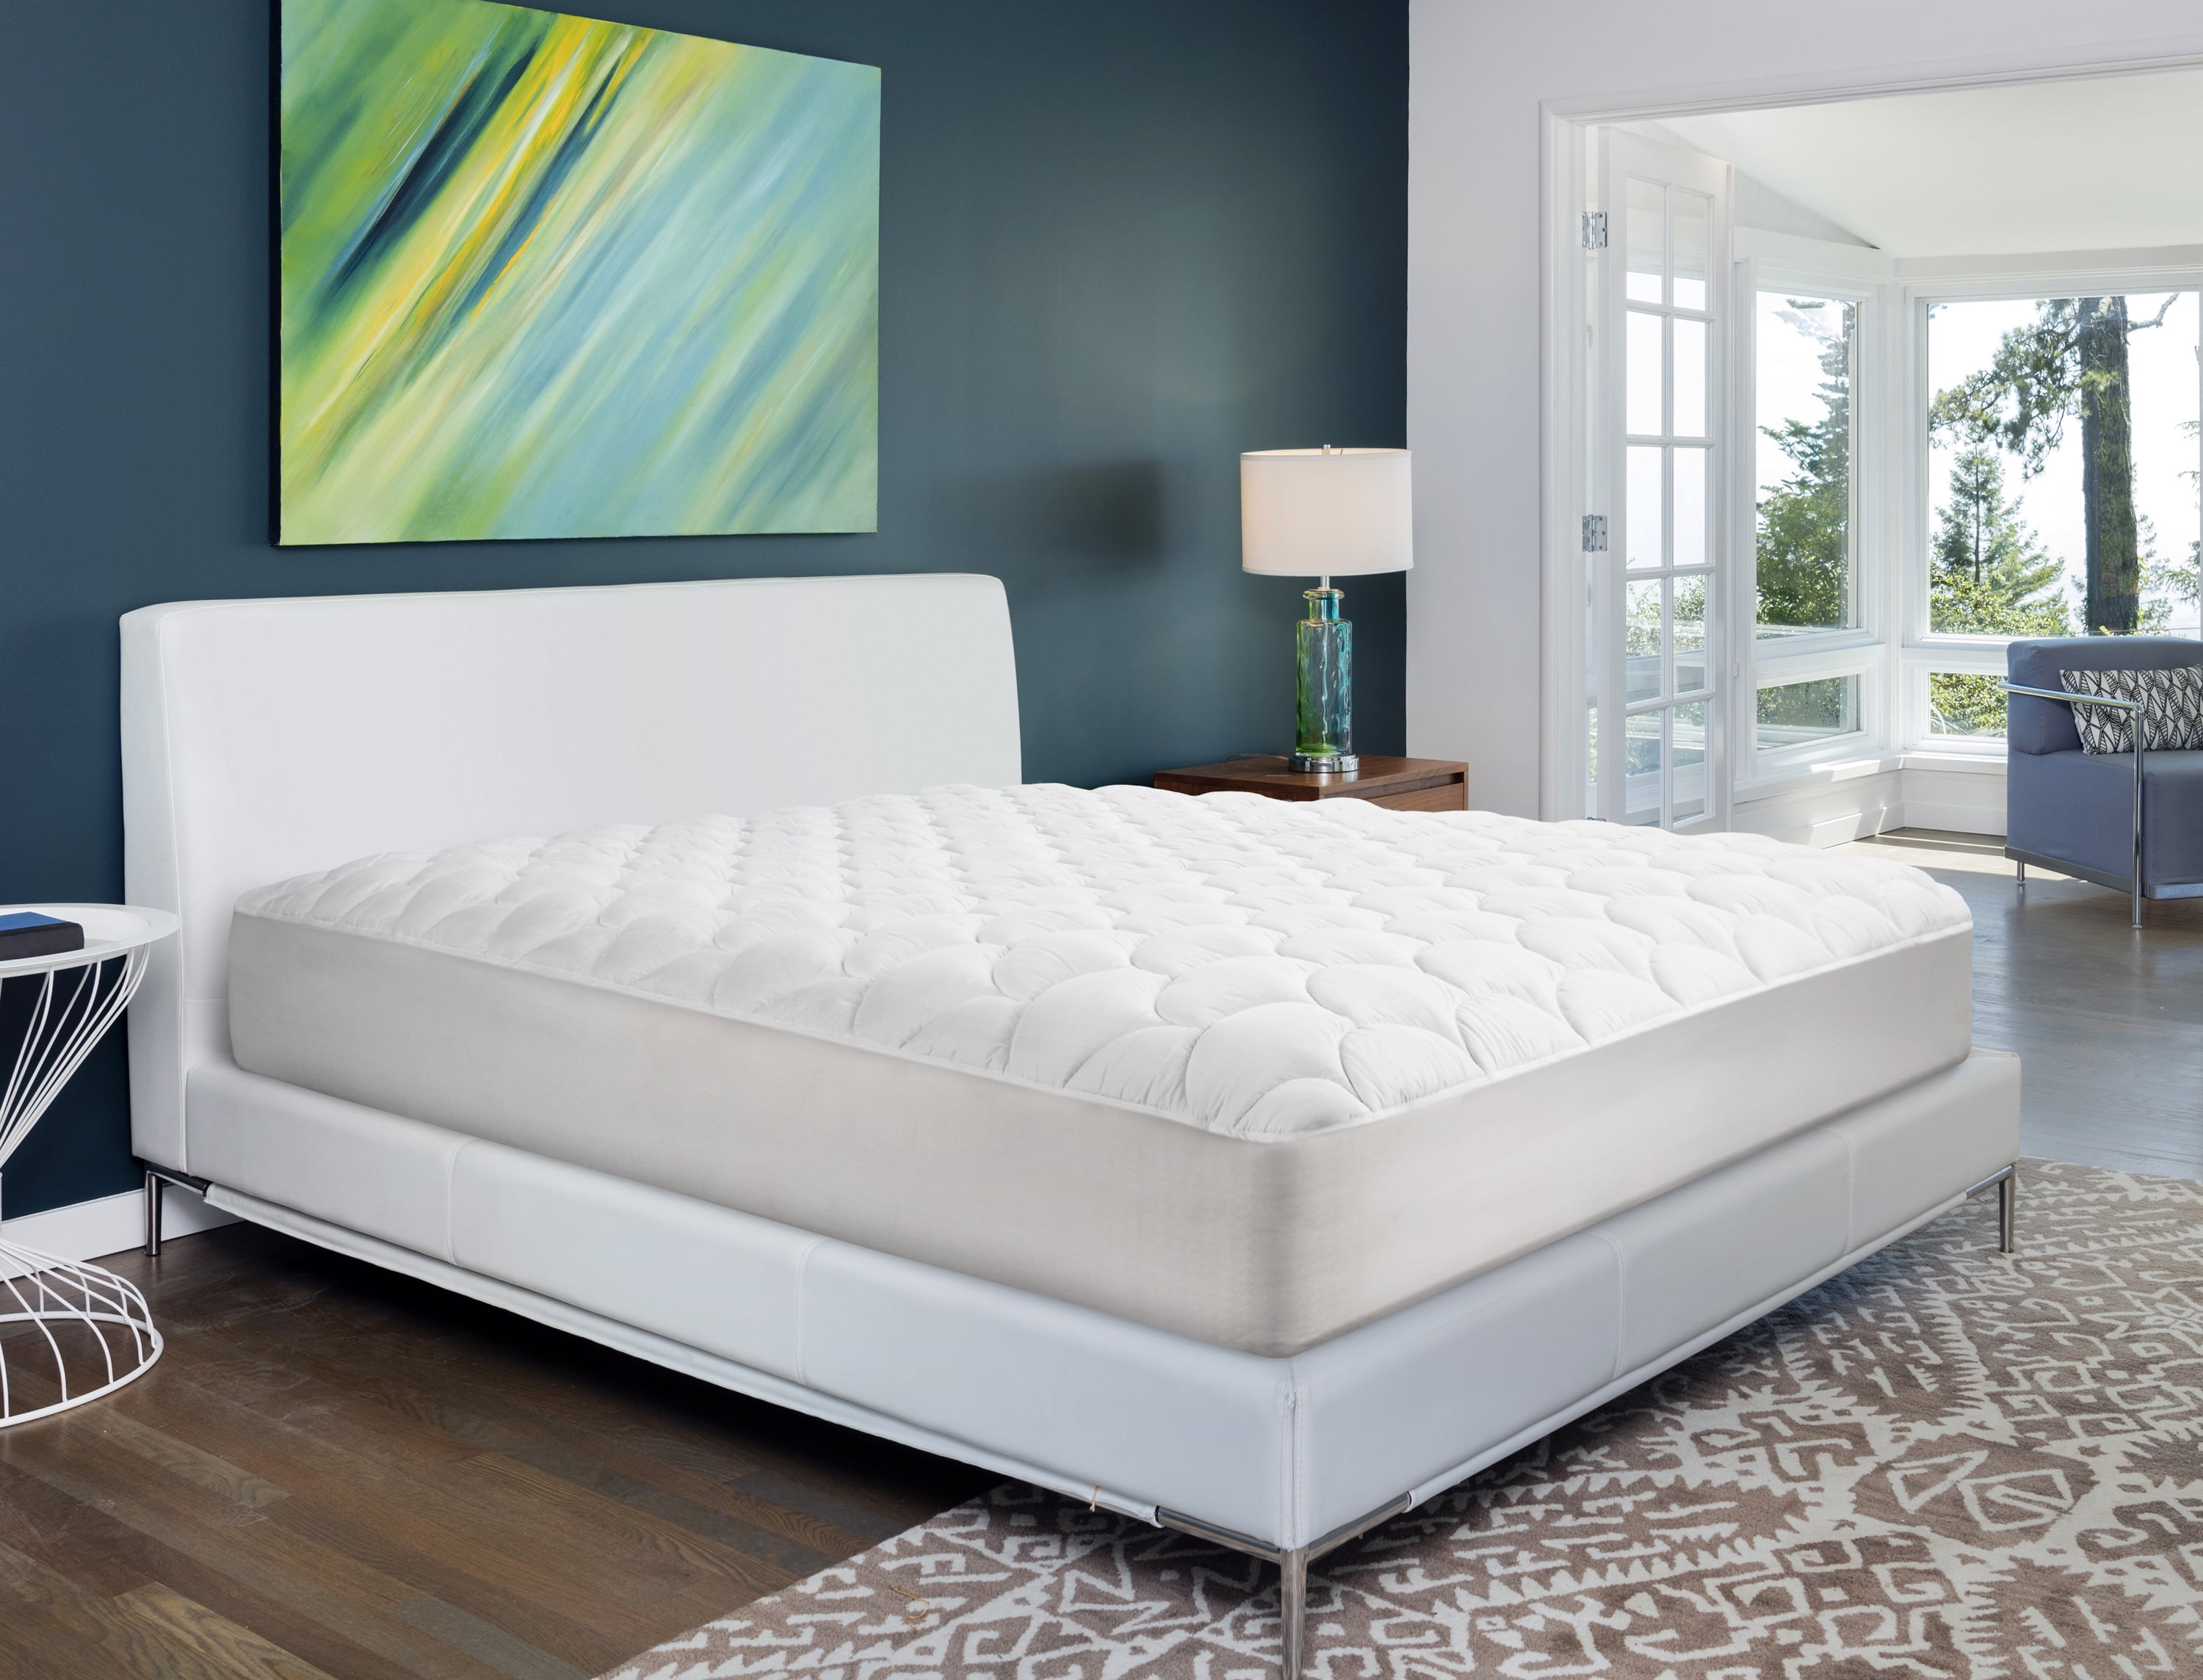 purepedic mattress pad review